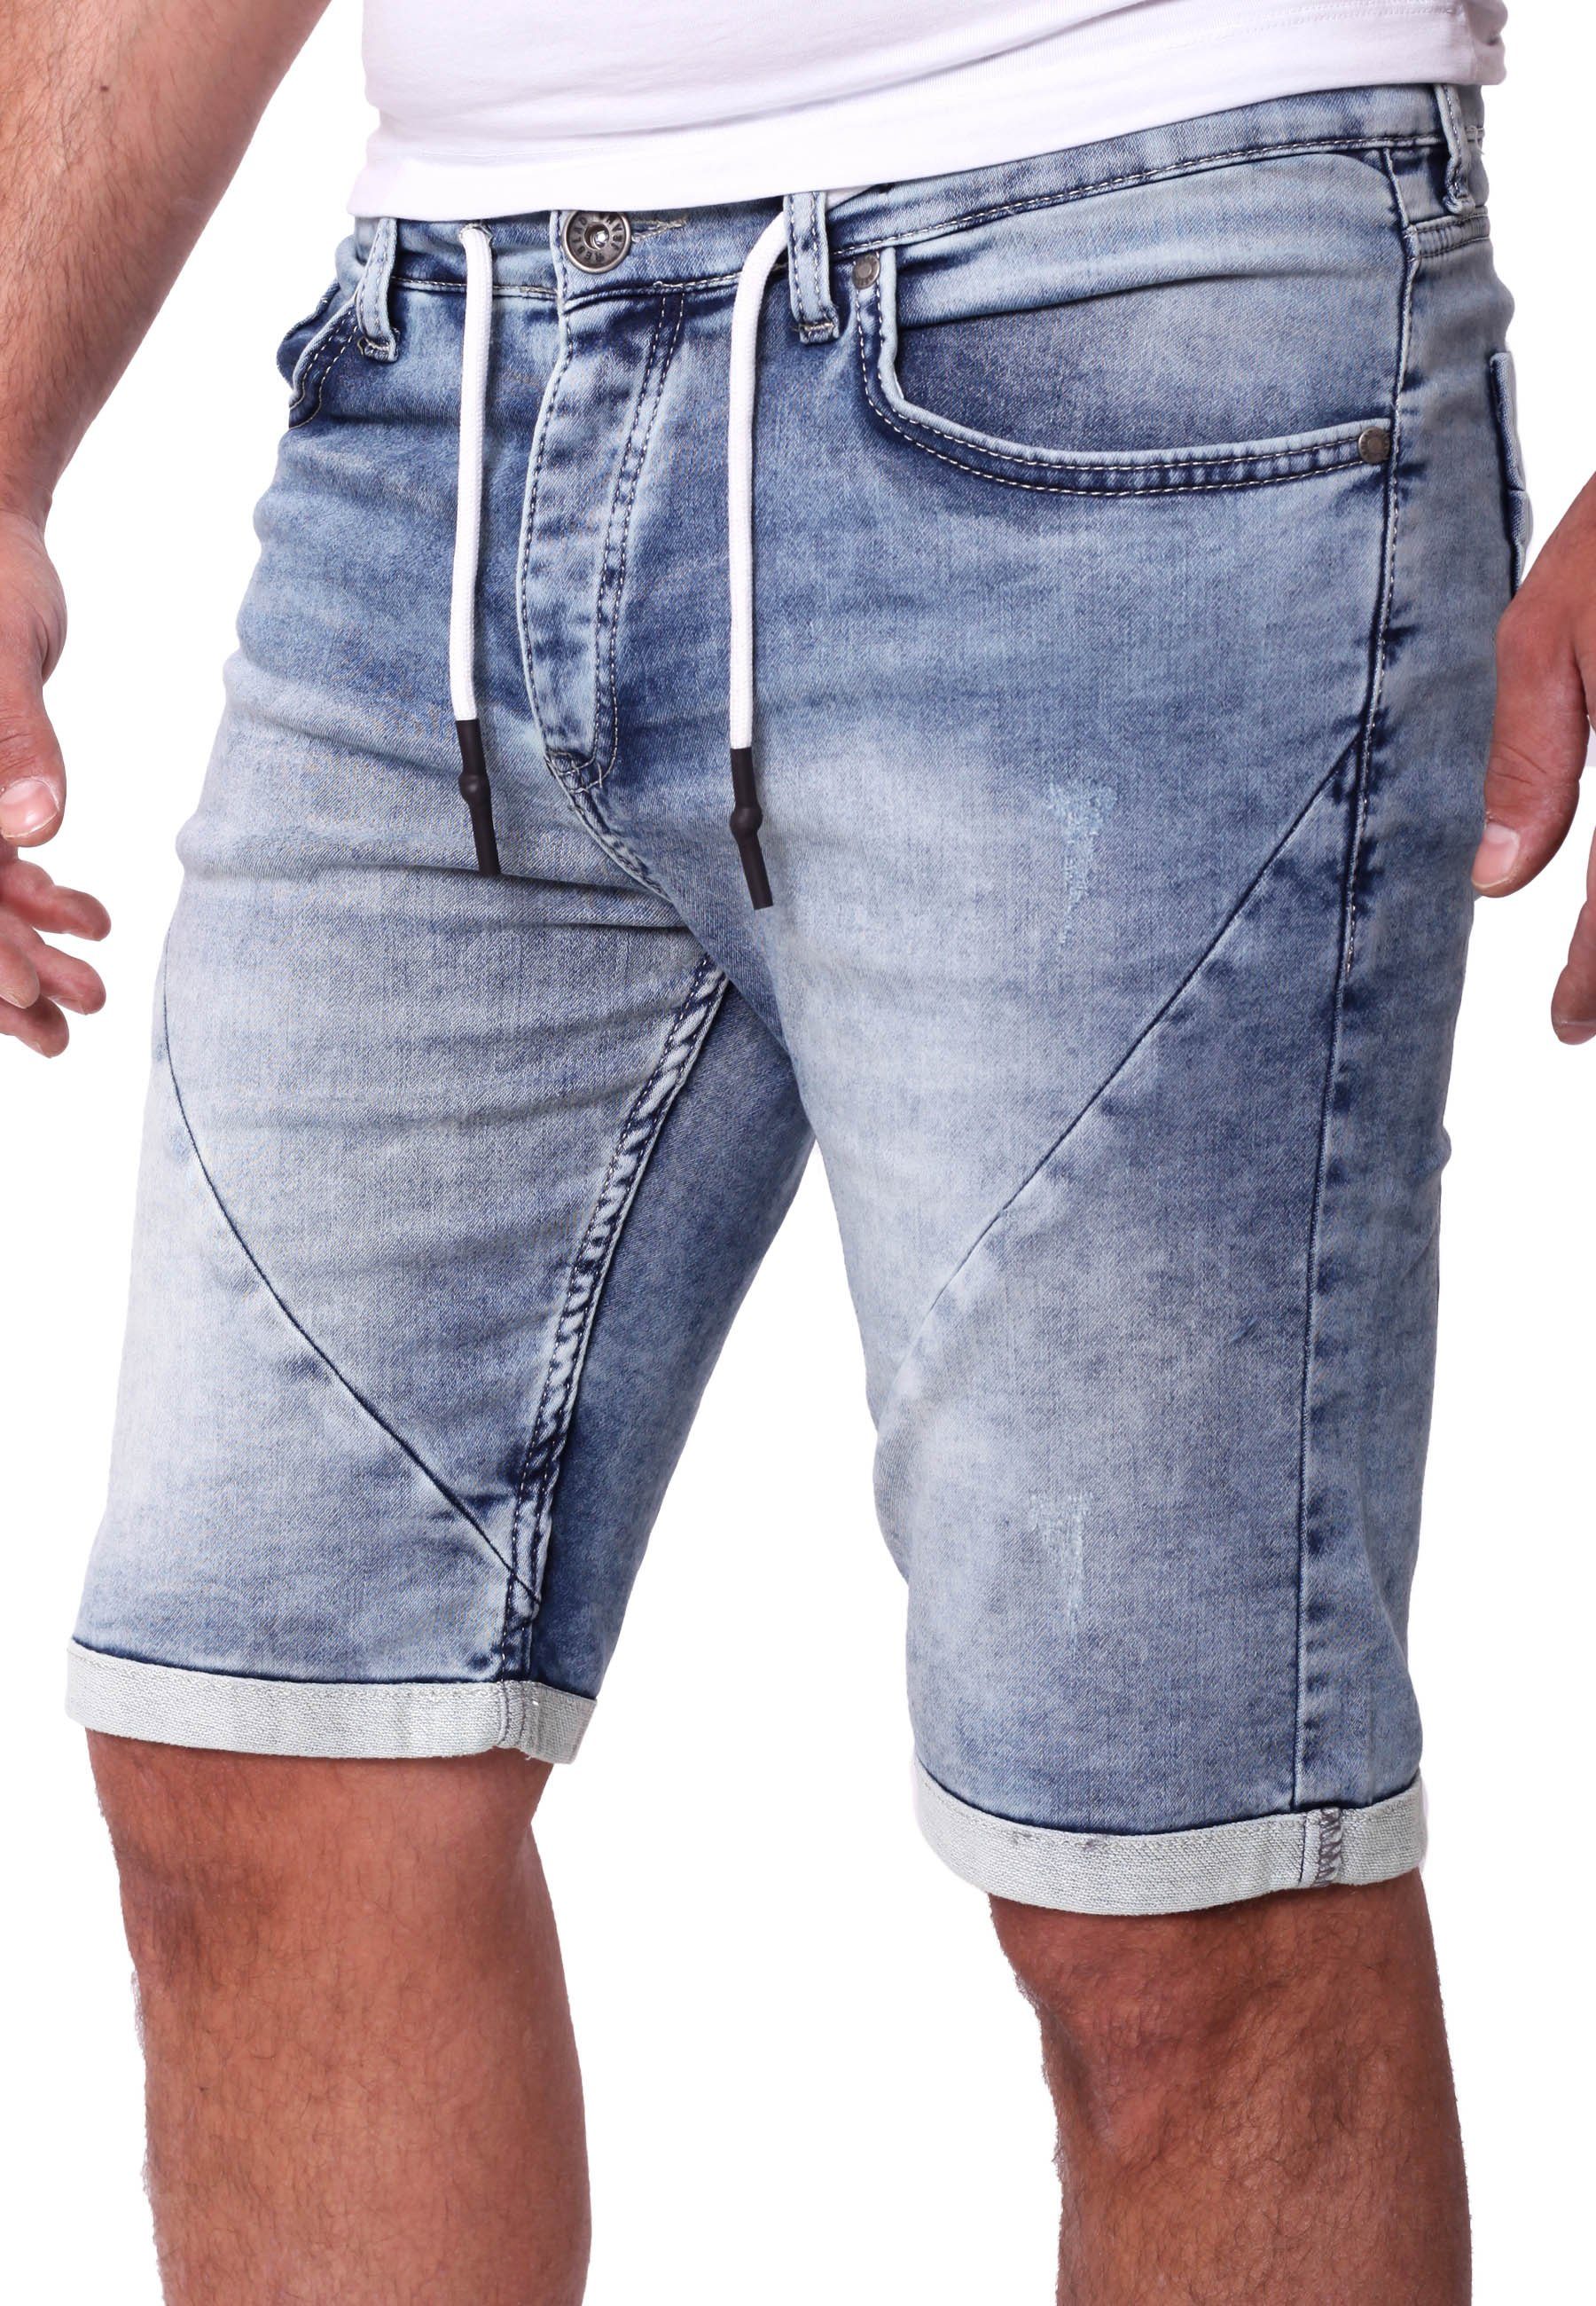 Reslad Jeansshorts Reslad Jeans Shorts Herren Kurze Hosen Sommer -  Jeans-Shorts Sweatjeans Jeansbermudas Stretch Jeans-Hose